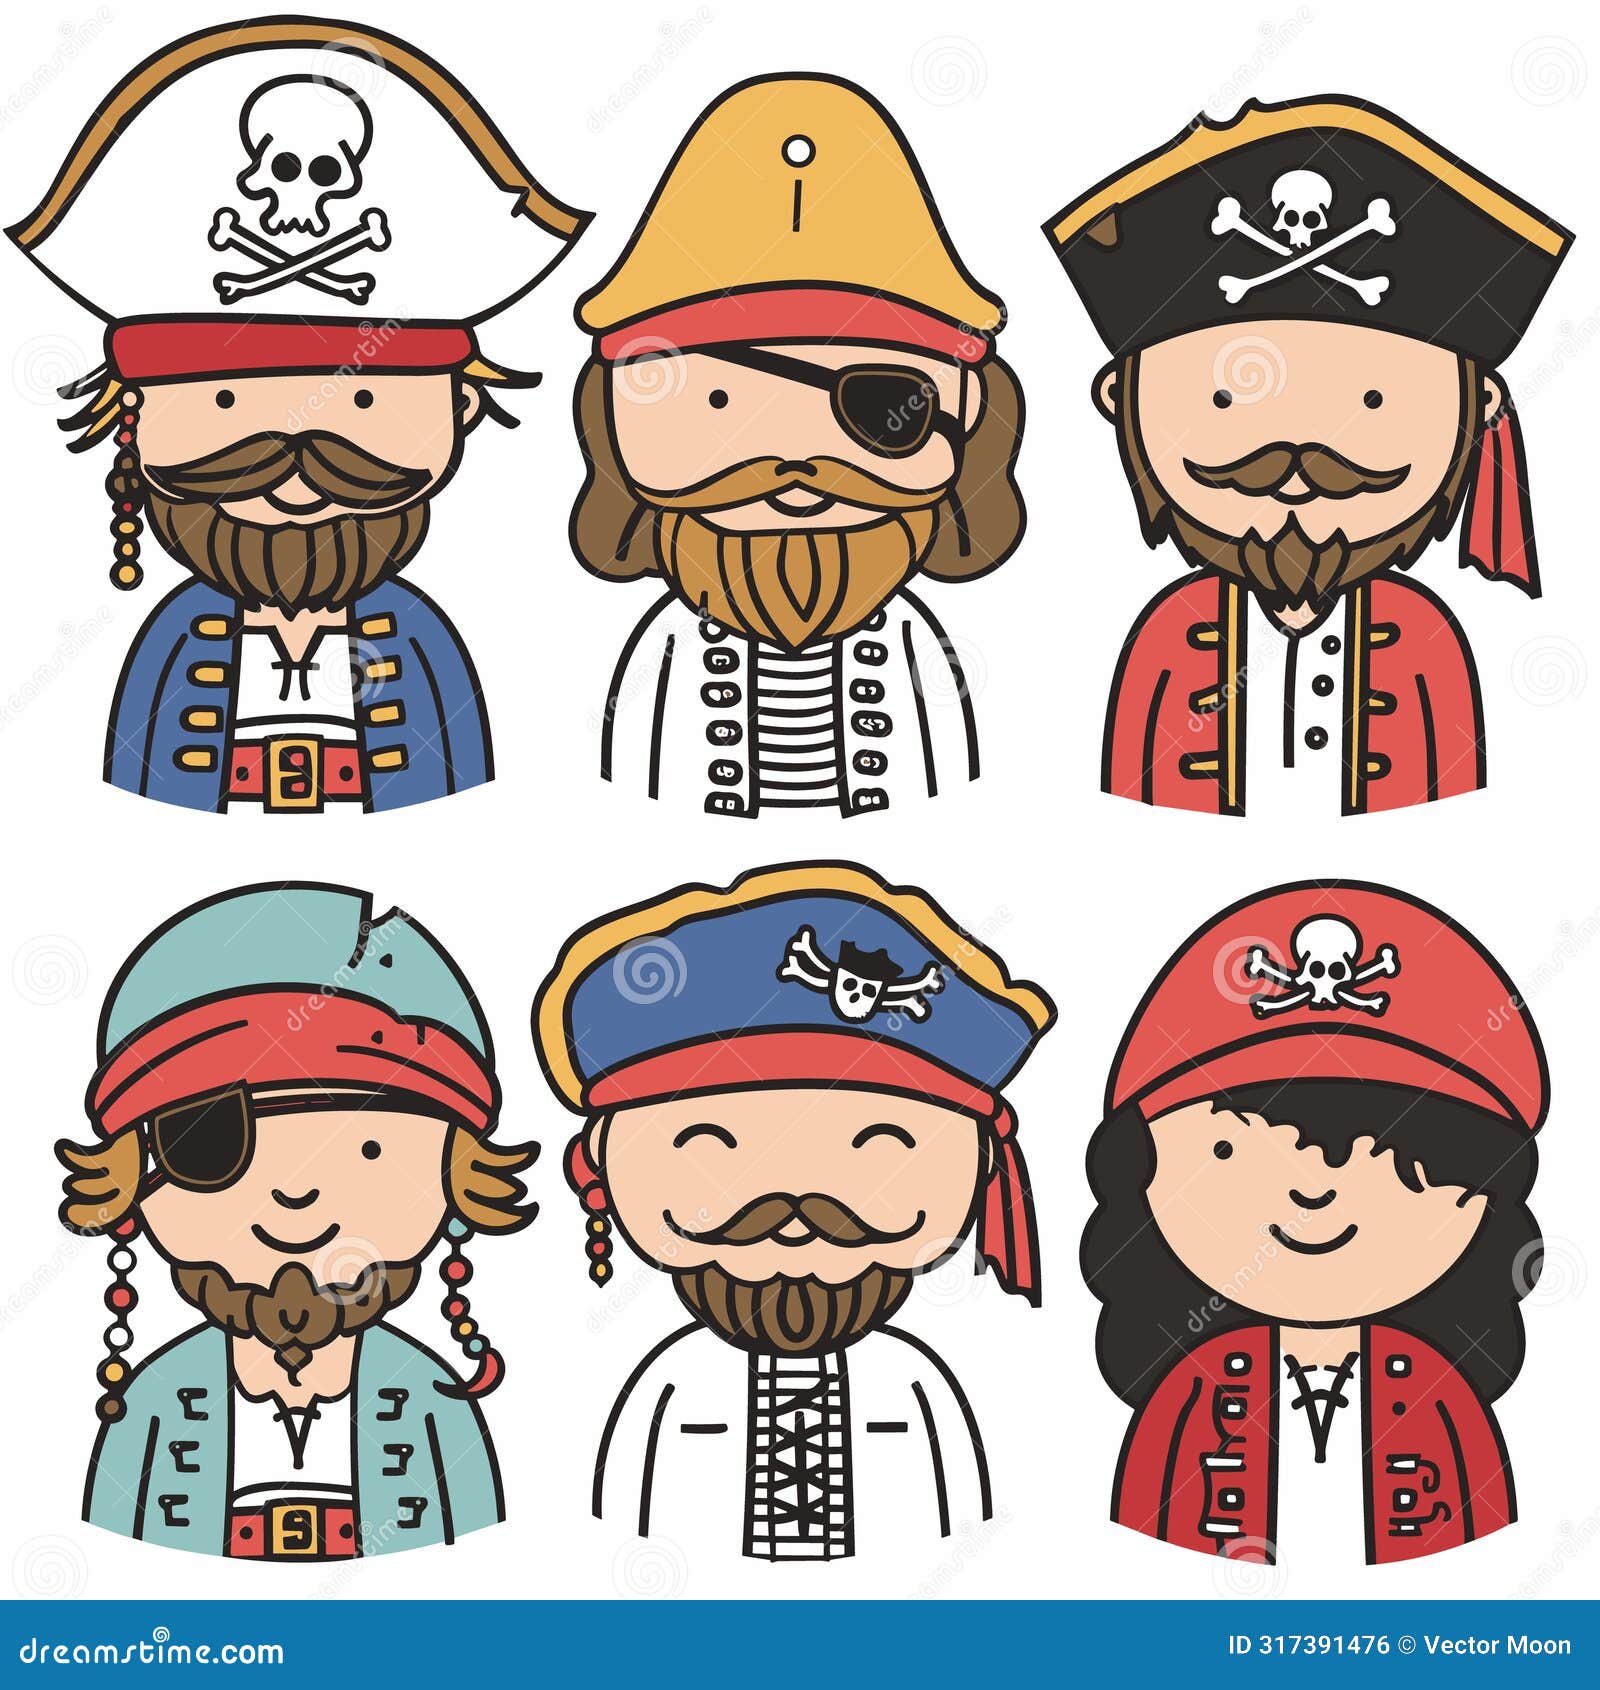 set six cartoon pirates representing various pirate attire headgear styles, eye patches beards